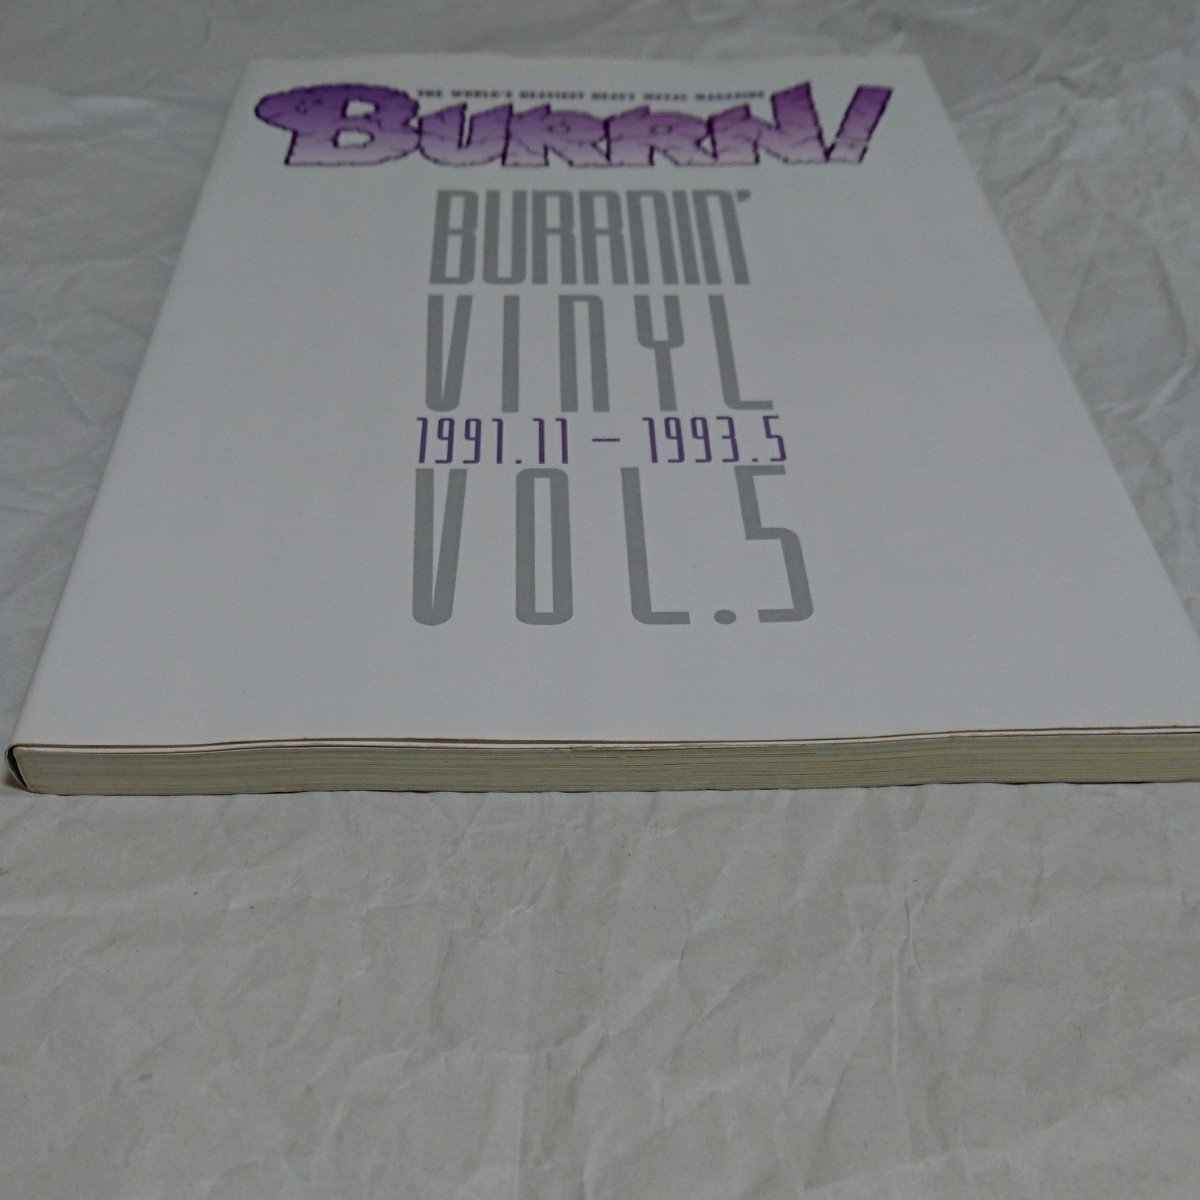 BURRN!★BURRNIN' VINYL VoL.5 1991.11-1993.5★アルバム・レビュー #レヴュー #酒井康 #伊藤政則 #広瀬和夫 #HR/HMディスクガイド_画像7